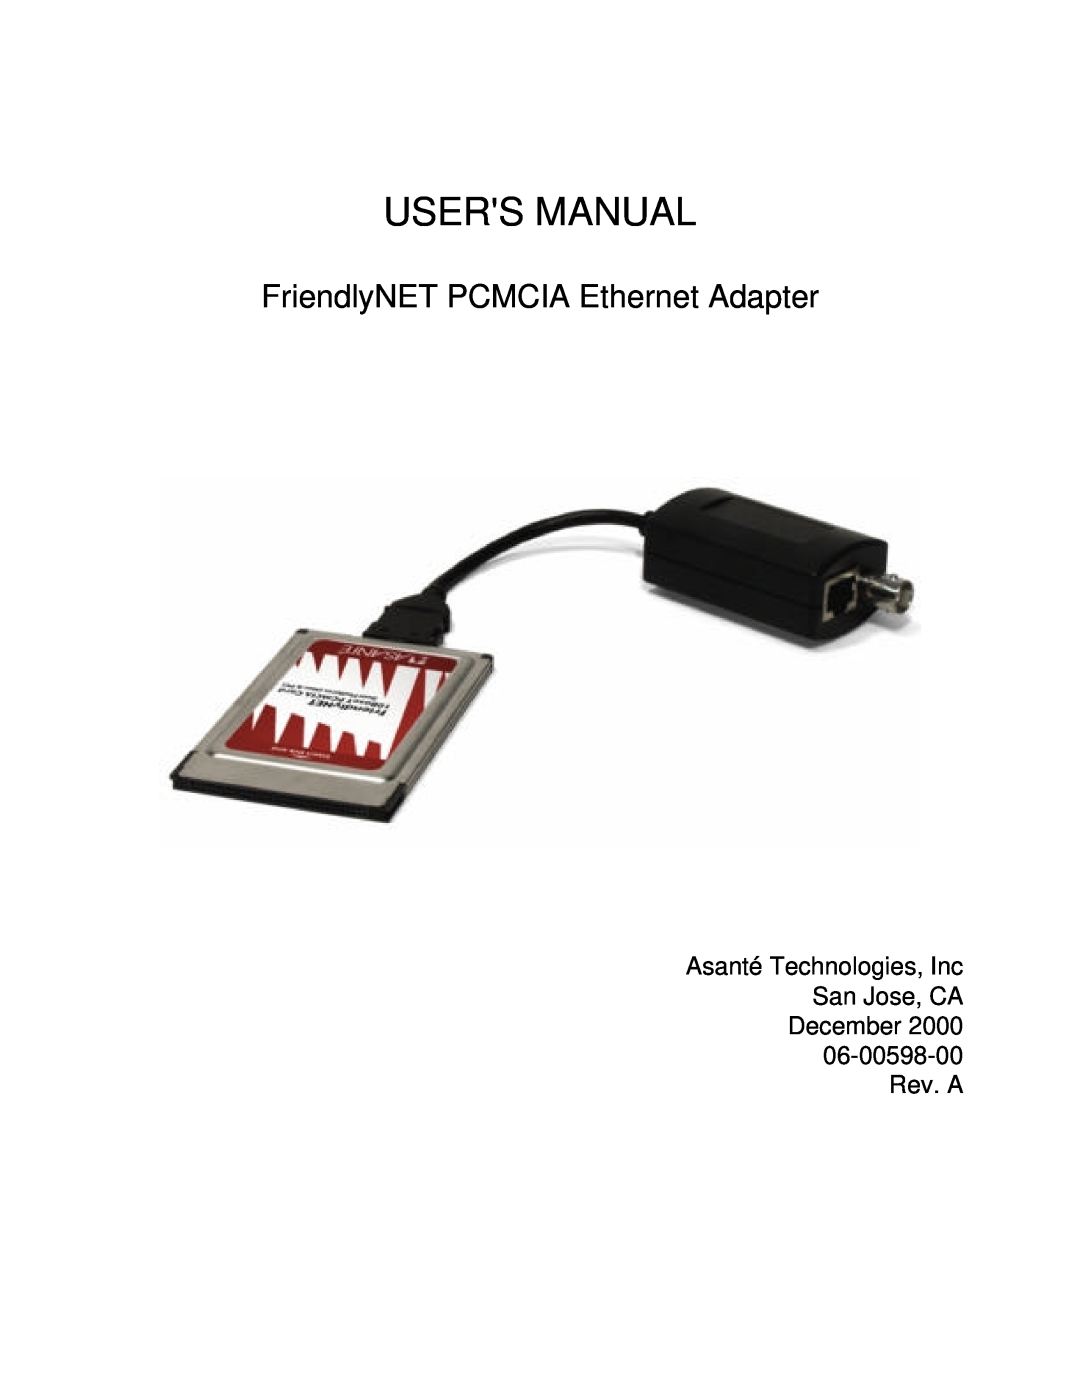 Asante Technologies user manual Users Manual, FriendlyNET PCMCIA Ethernet Adapter 